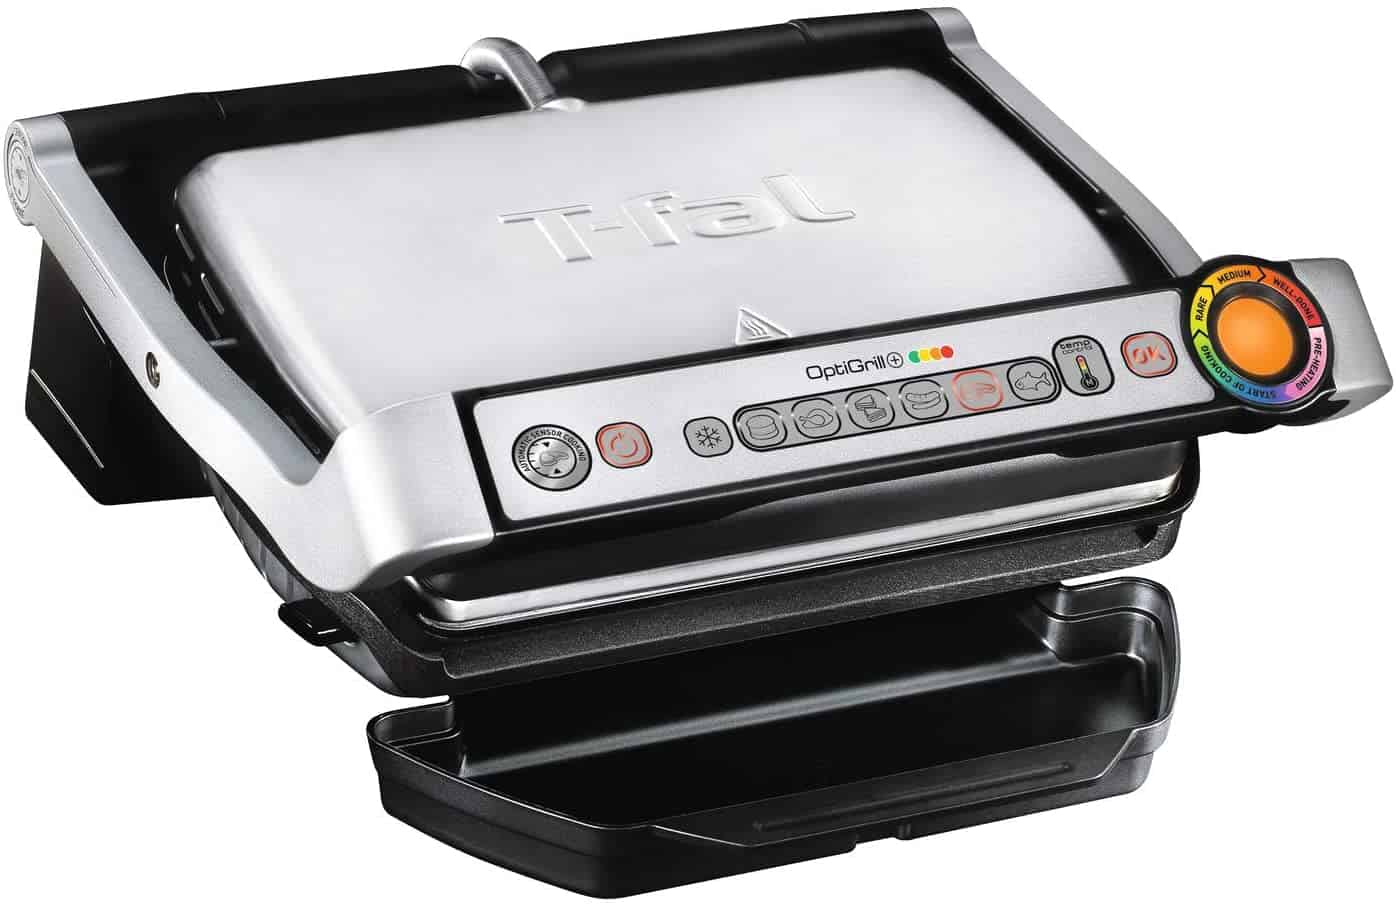 Best high-tech indoor grill- T-fal GC70 OptiGrill